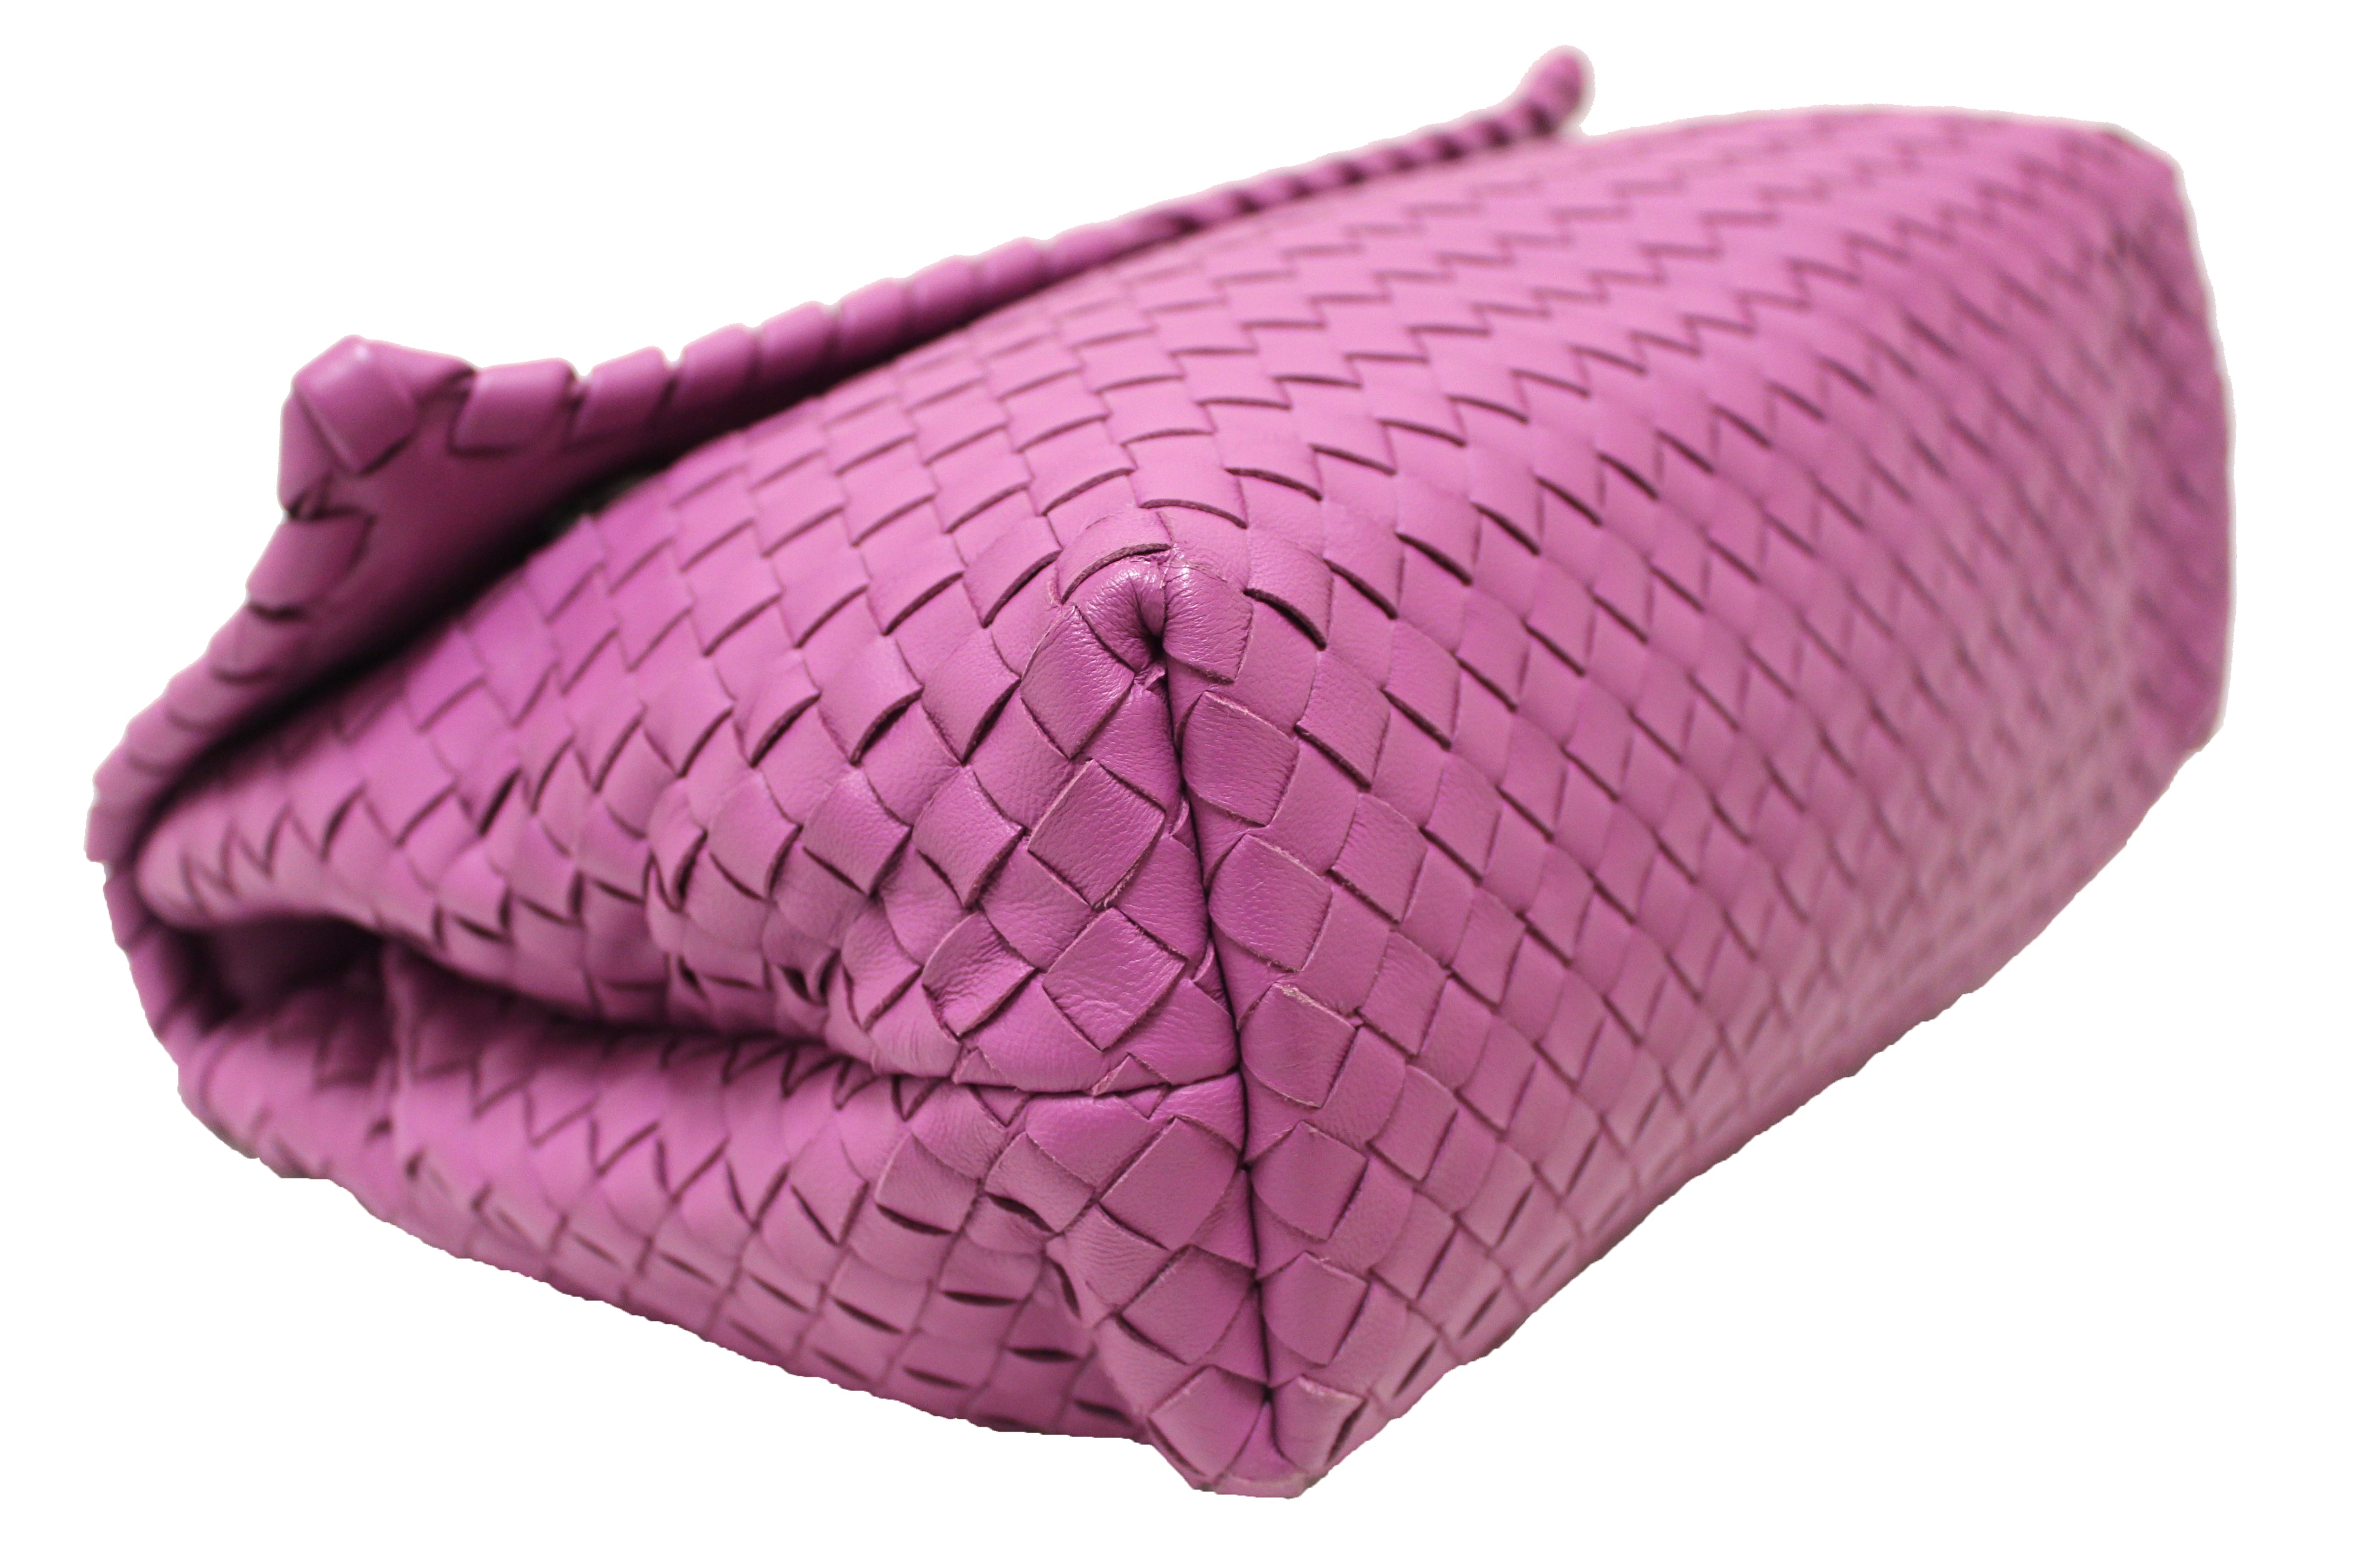 Authentic Bottega Veneta Purple Nappa Intrecciato Woven Leather Large Olimpia Bag